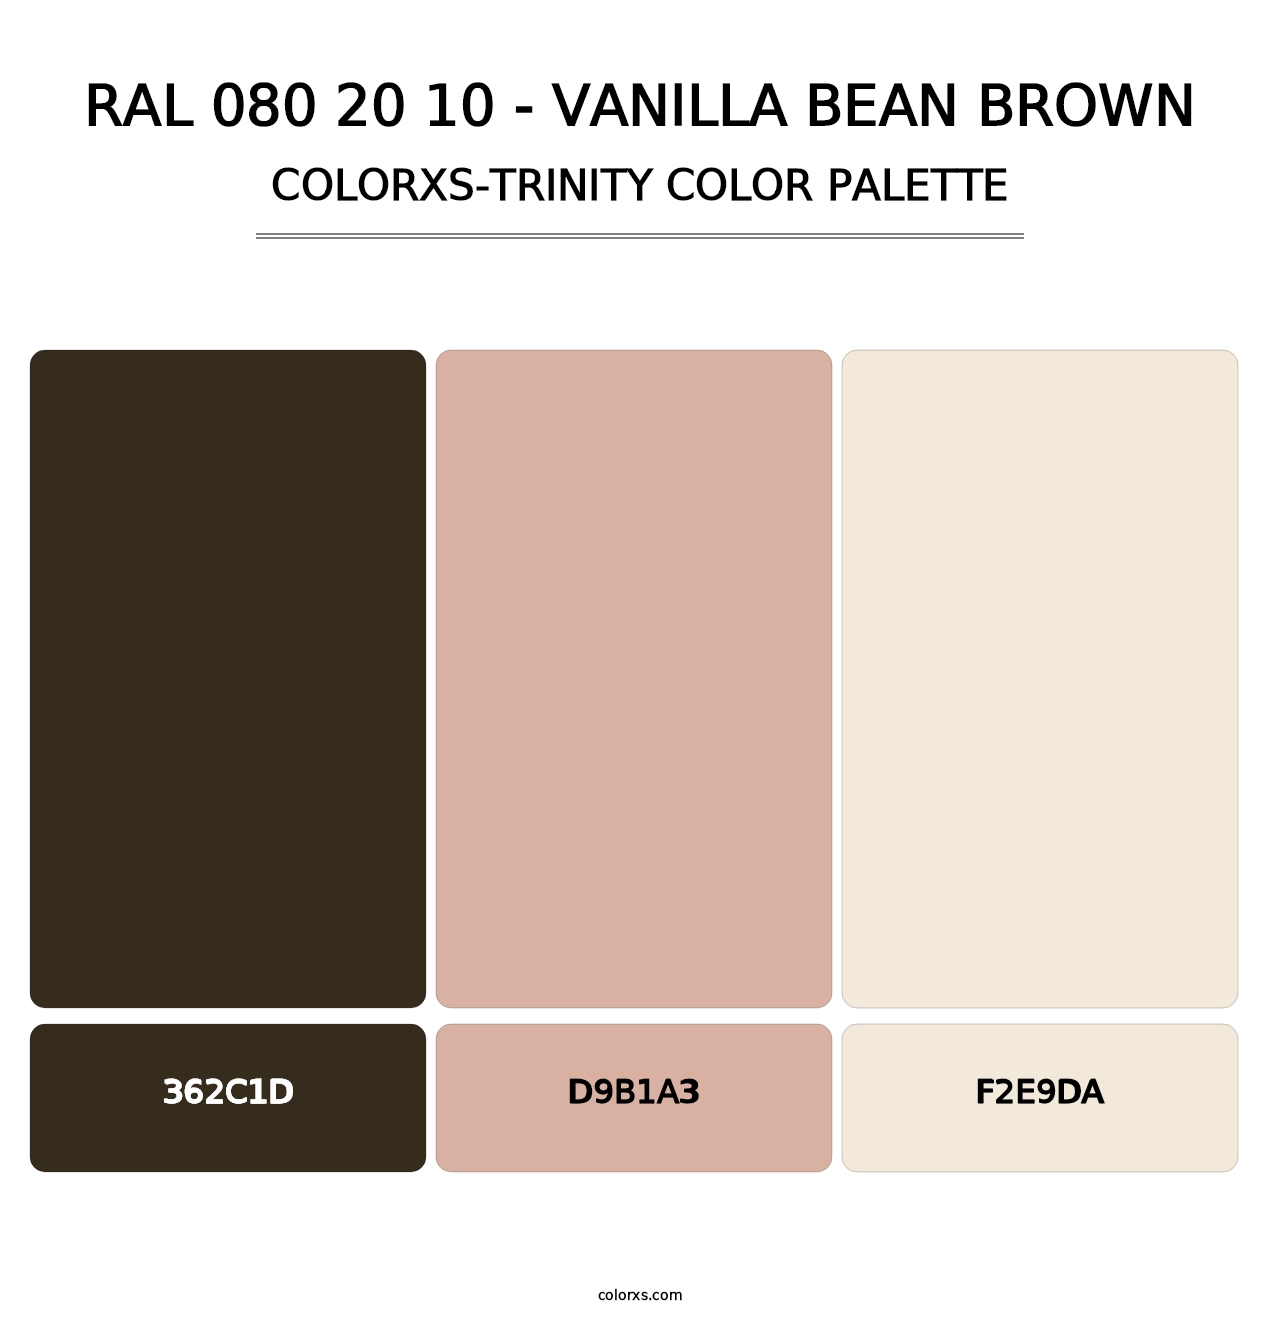 RAL 080 20 10 - Vanilla Bean Brown - Colorxs Trinity Palette